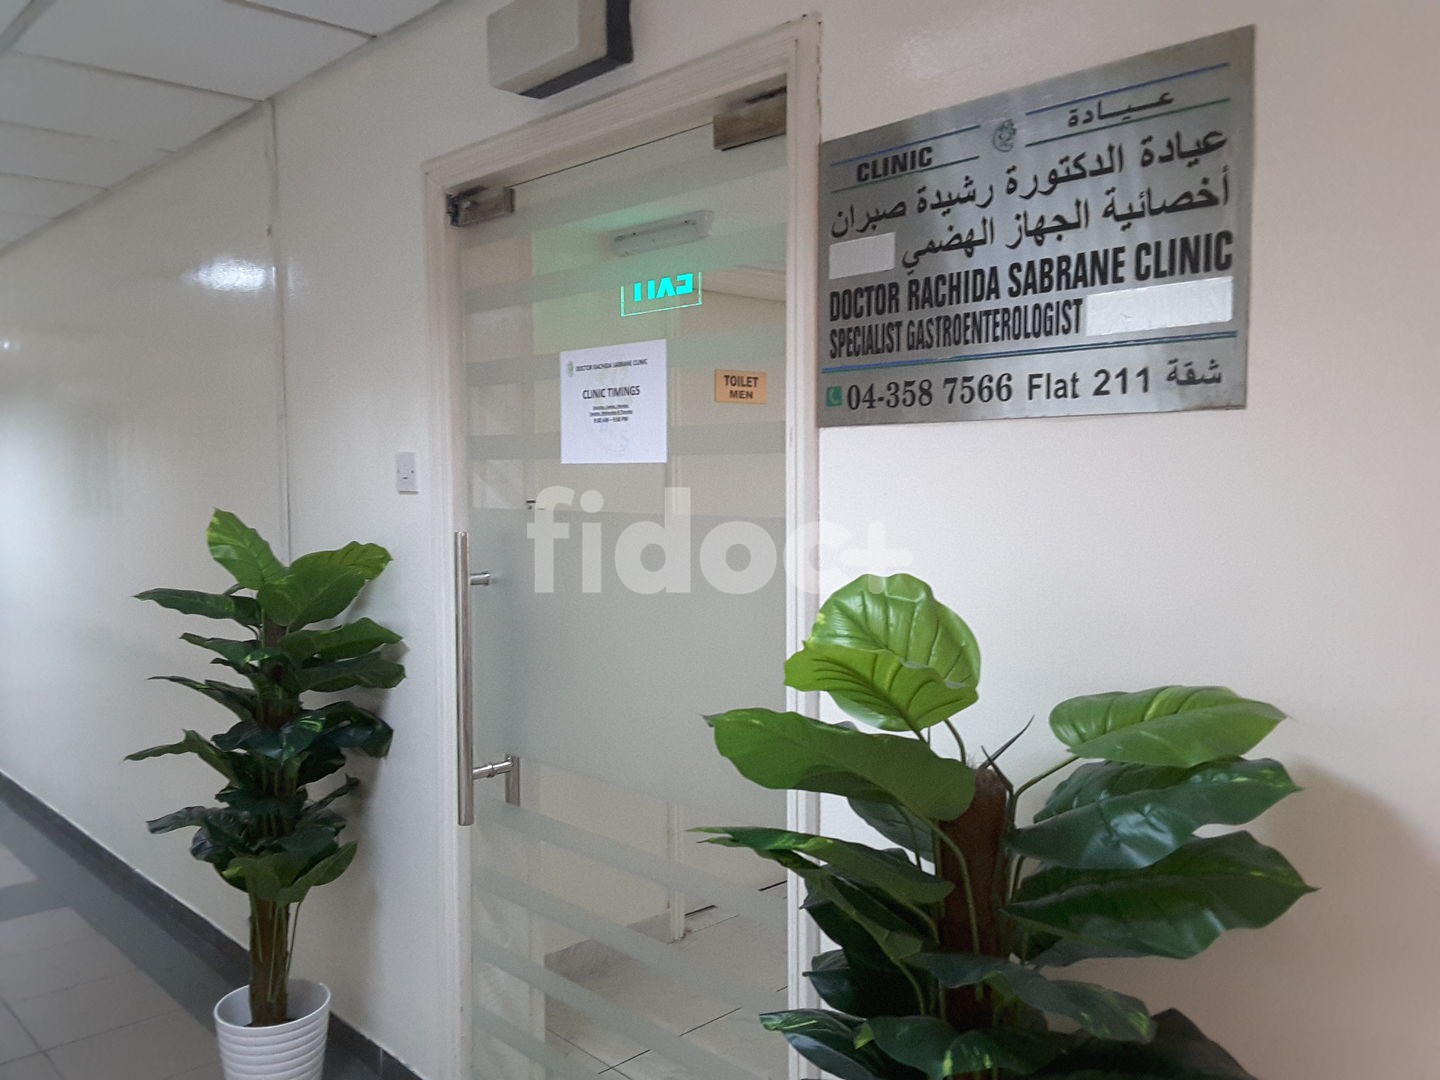 Doctor Rachida Sabrane Clinic, Dubai